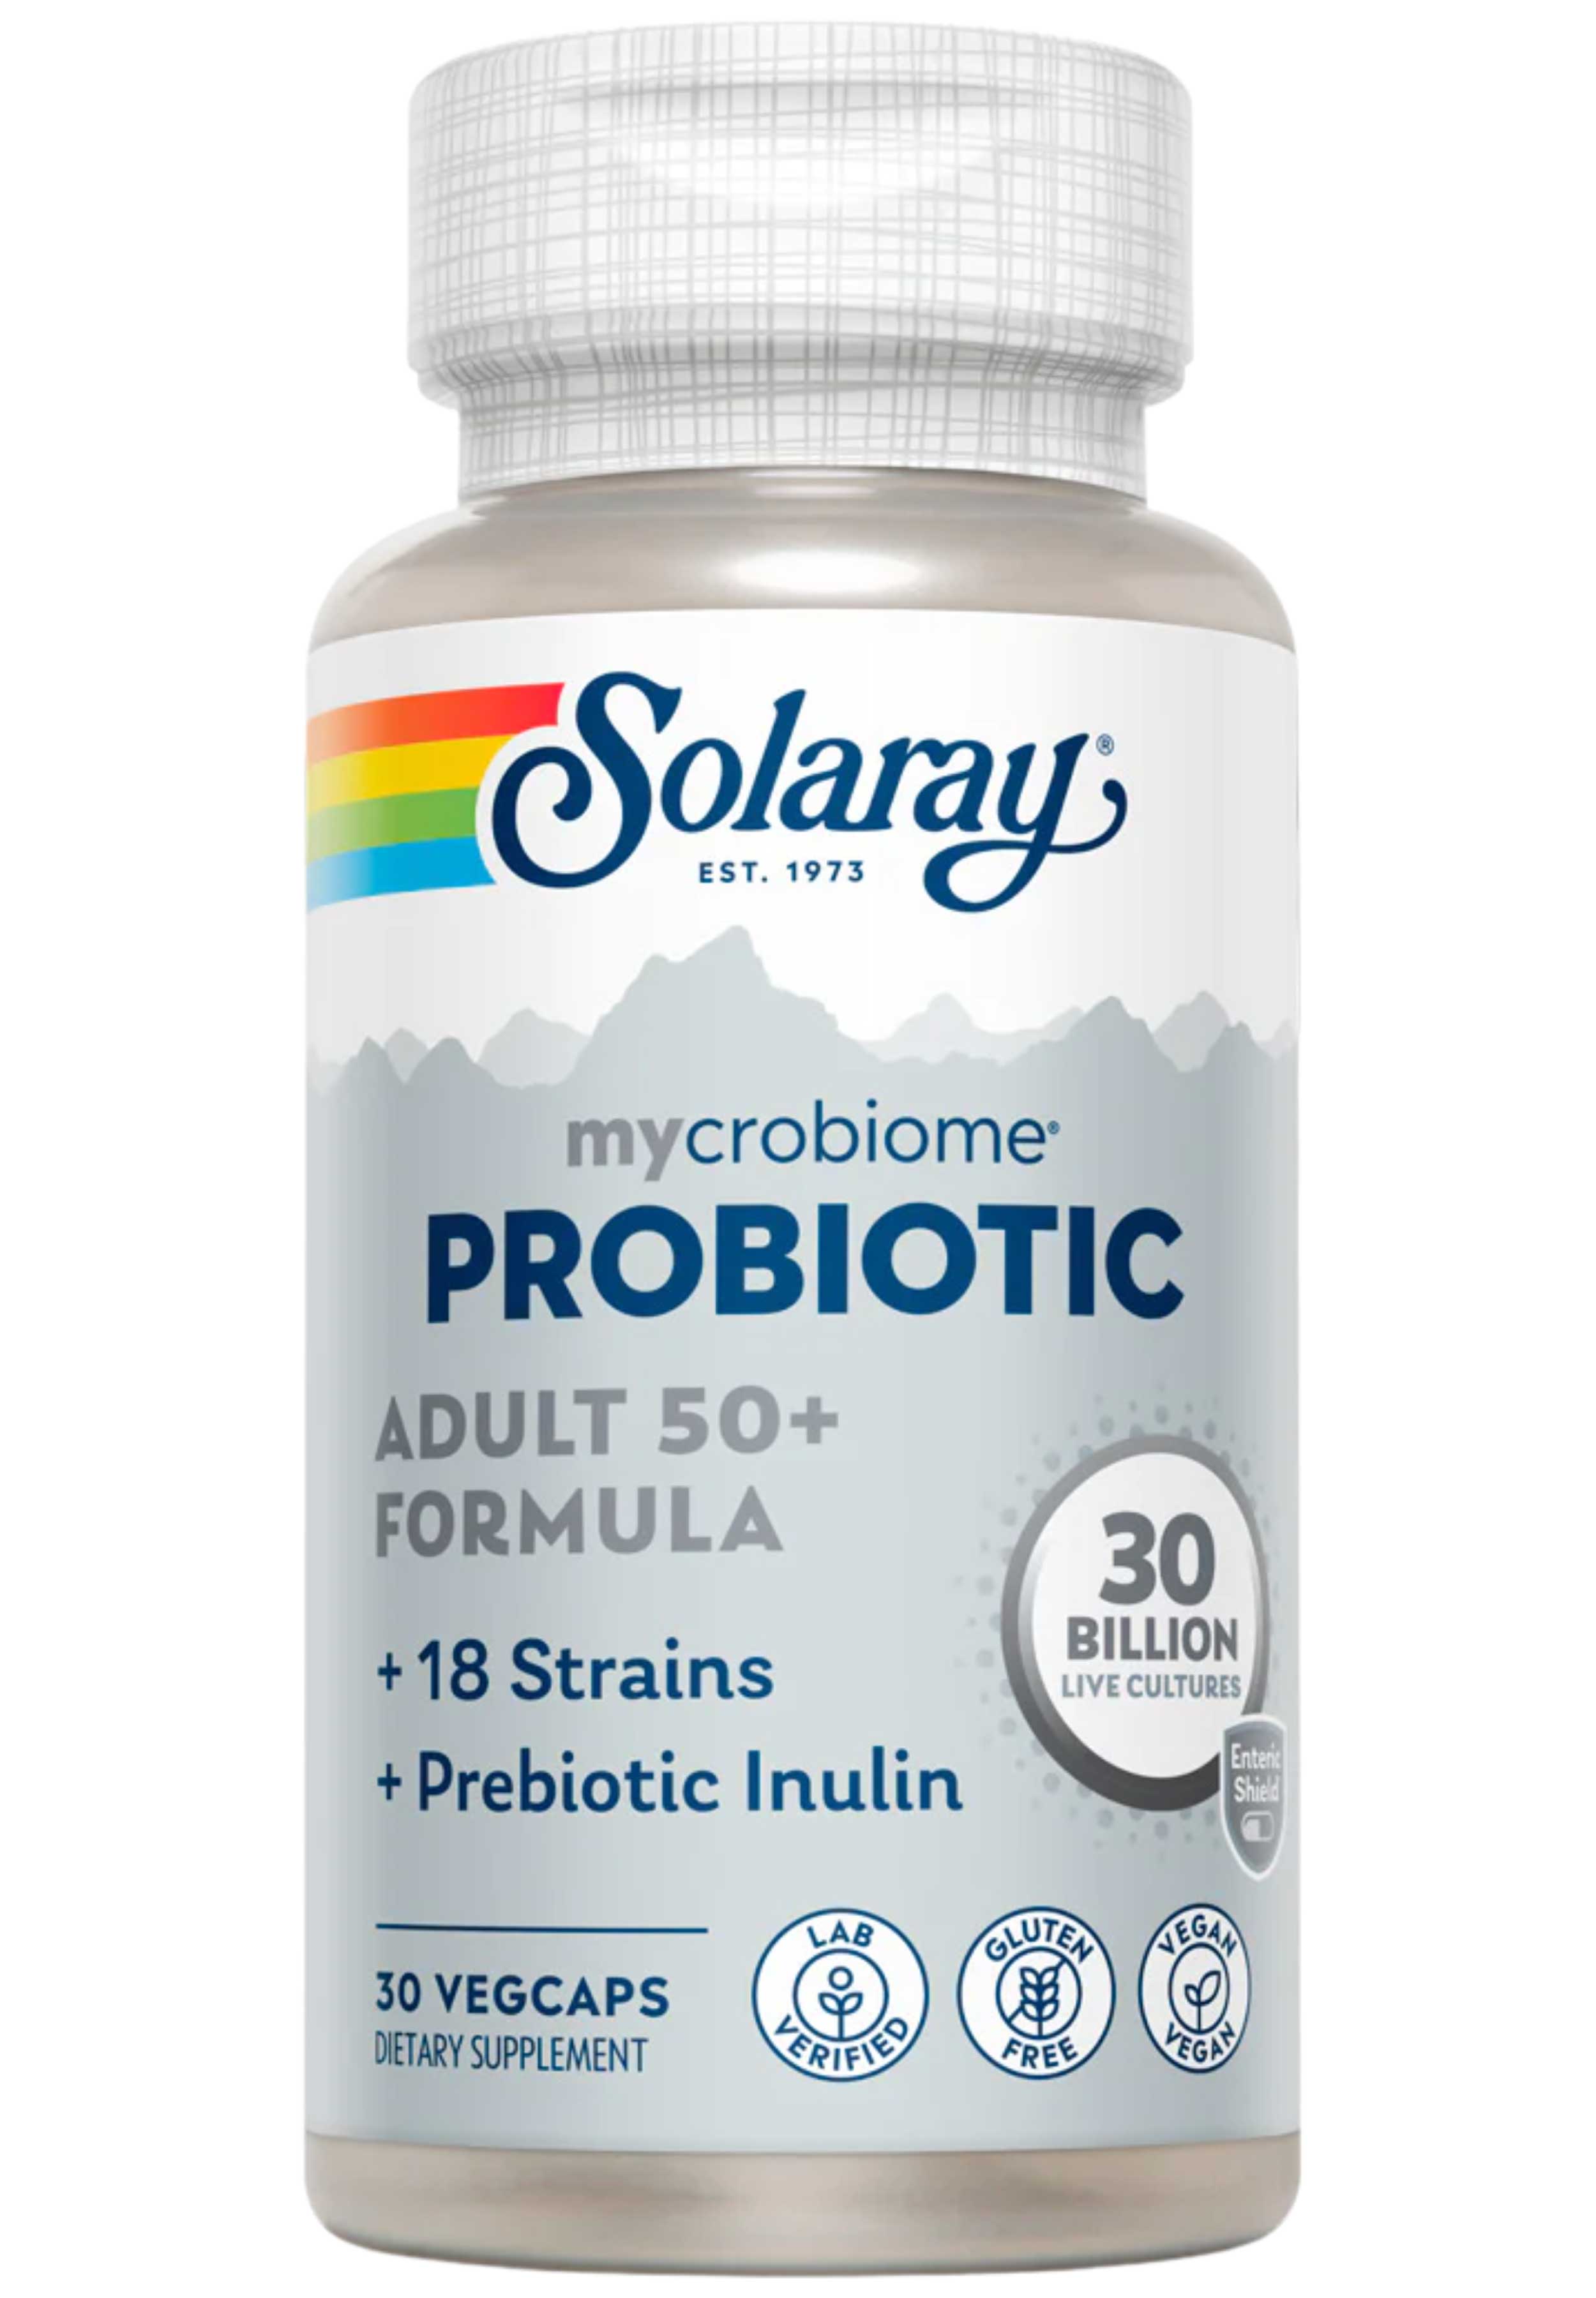 Solaray Mycrobiome Probiotic Adult 50+